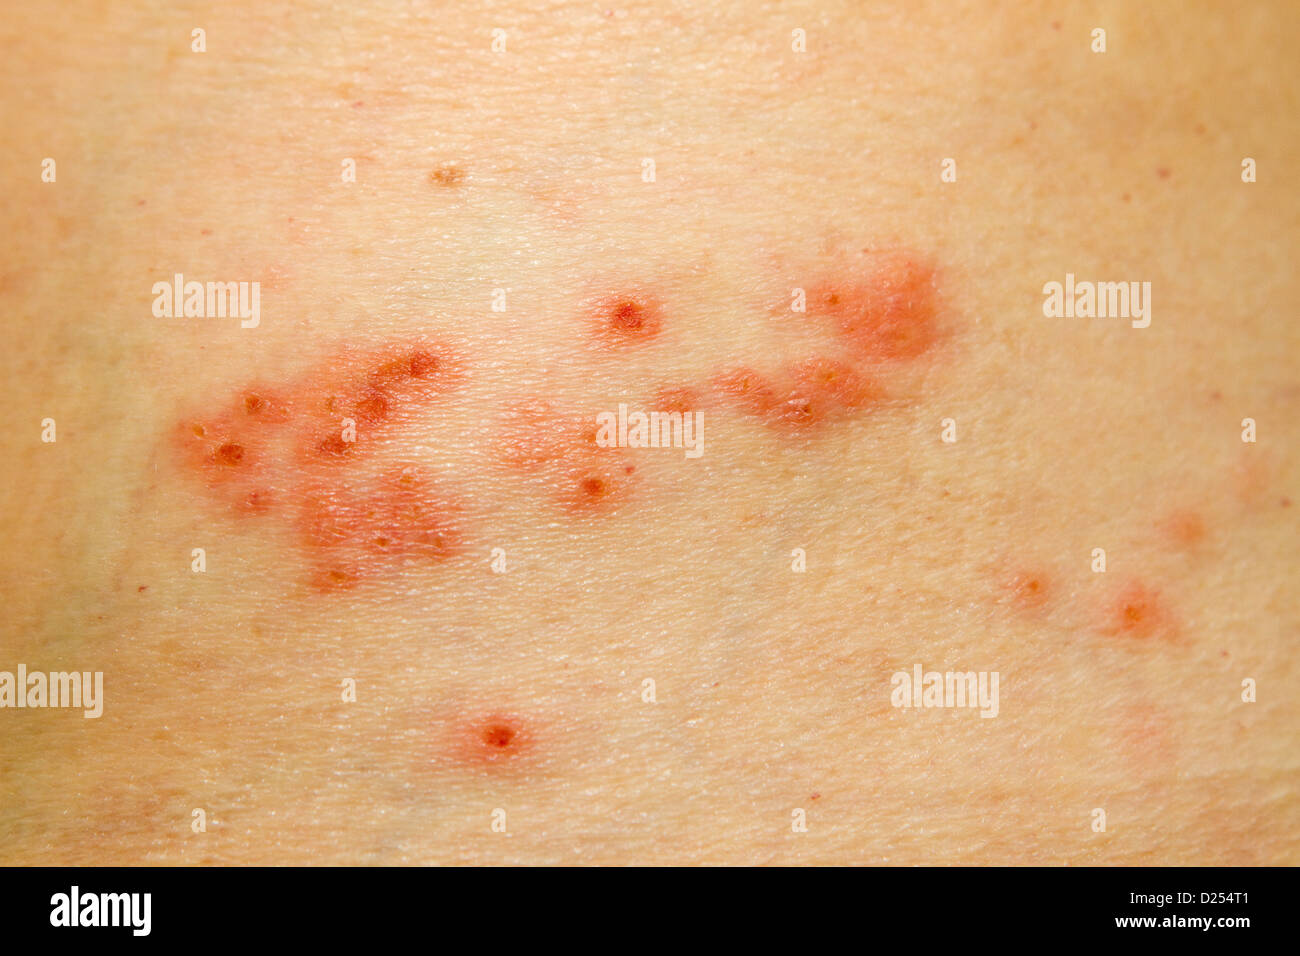 Mild case of shingles rash on the side of the body. Stock Photo